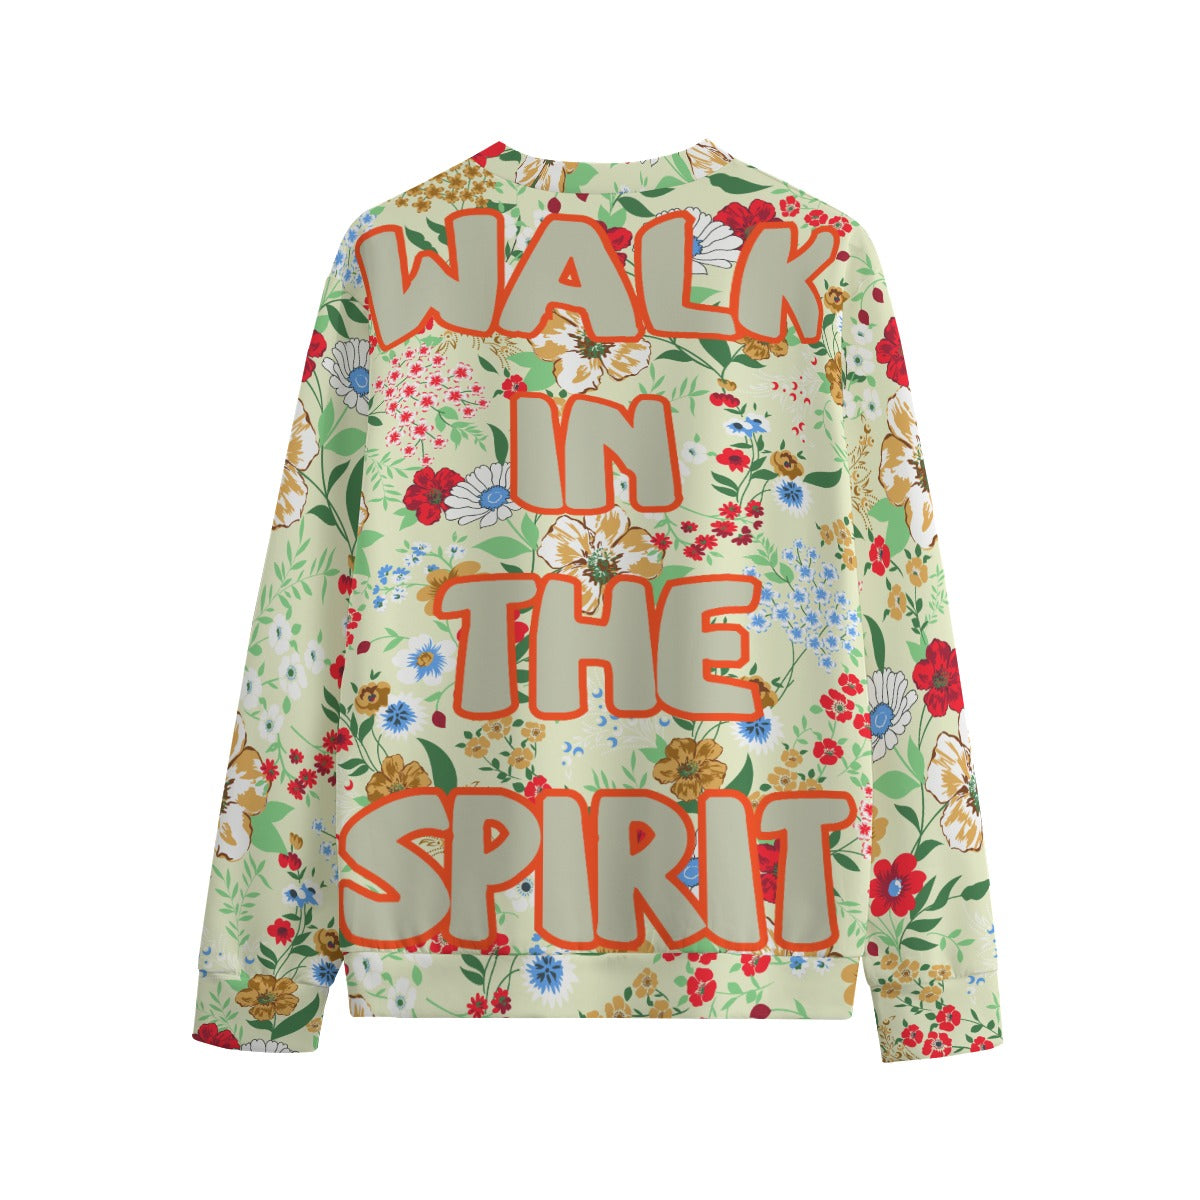 Walk in the Spirit Sweatshirt